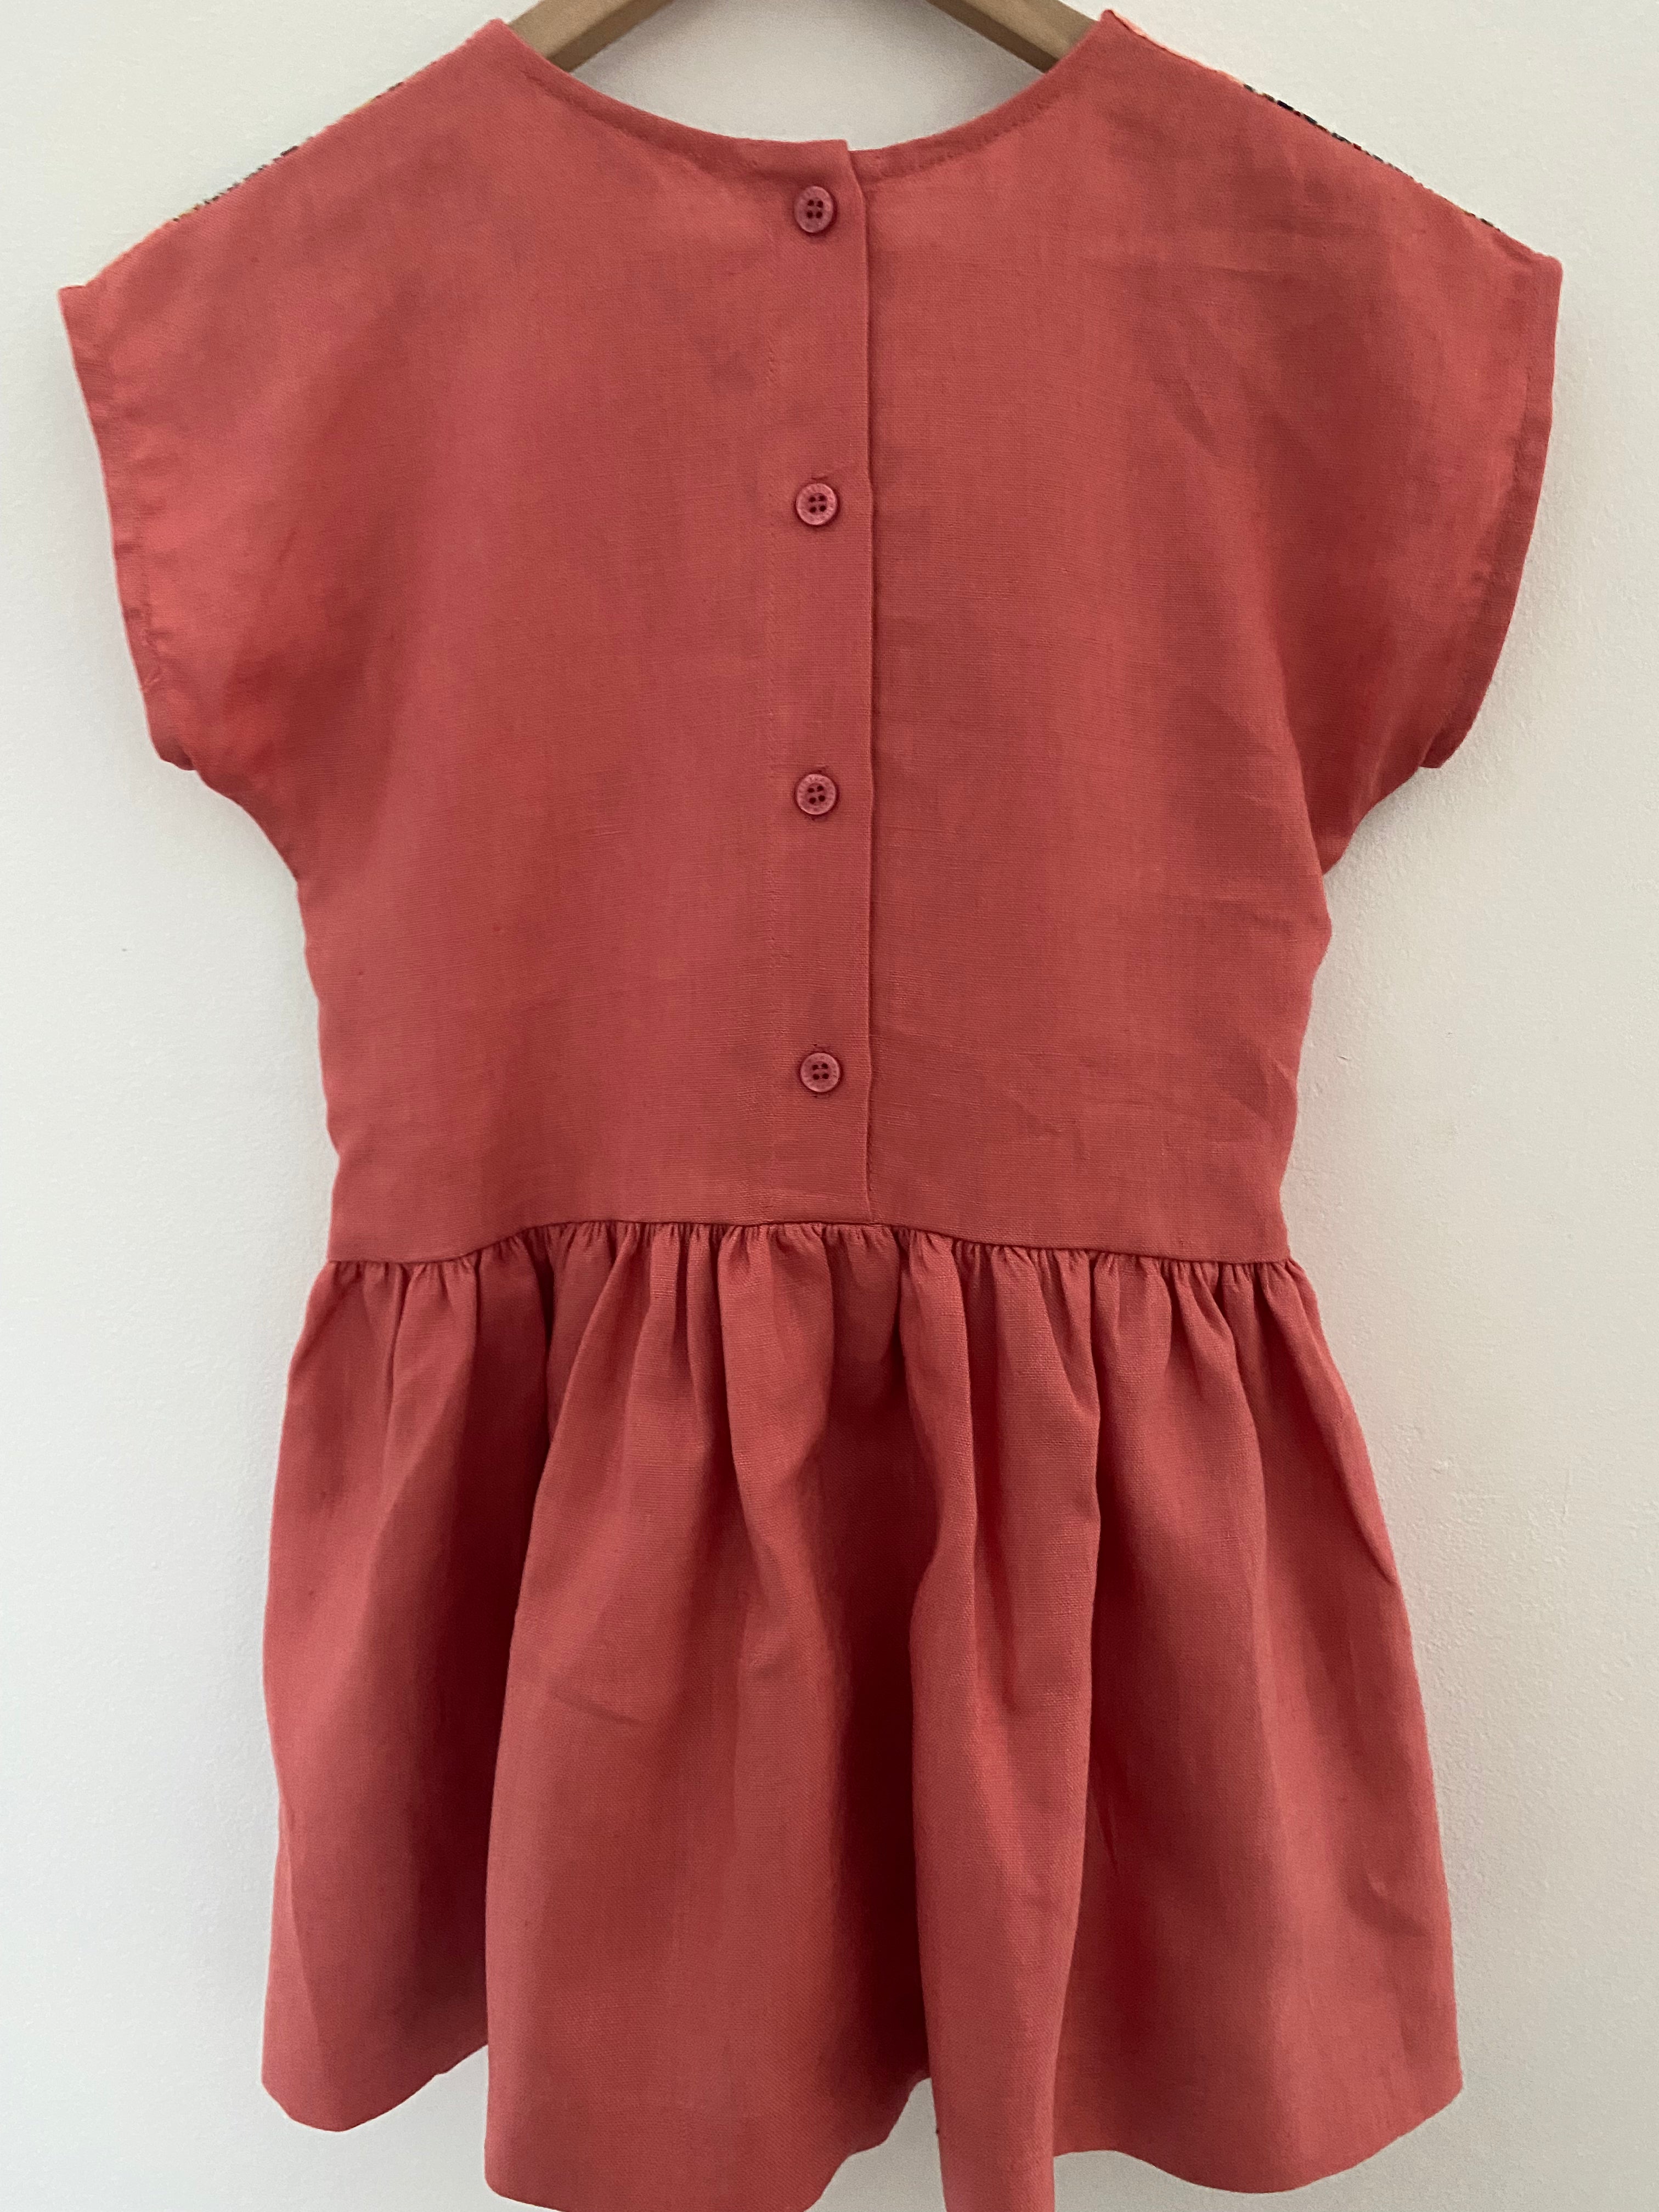 Maggie Patchwork Dress Coral Linen 4y